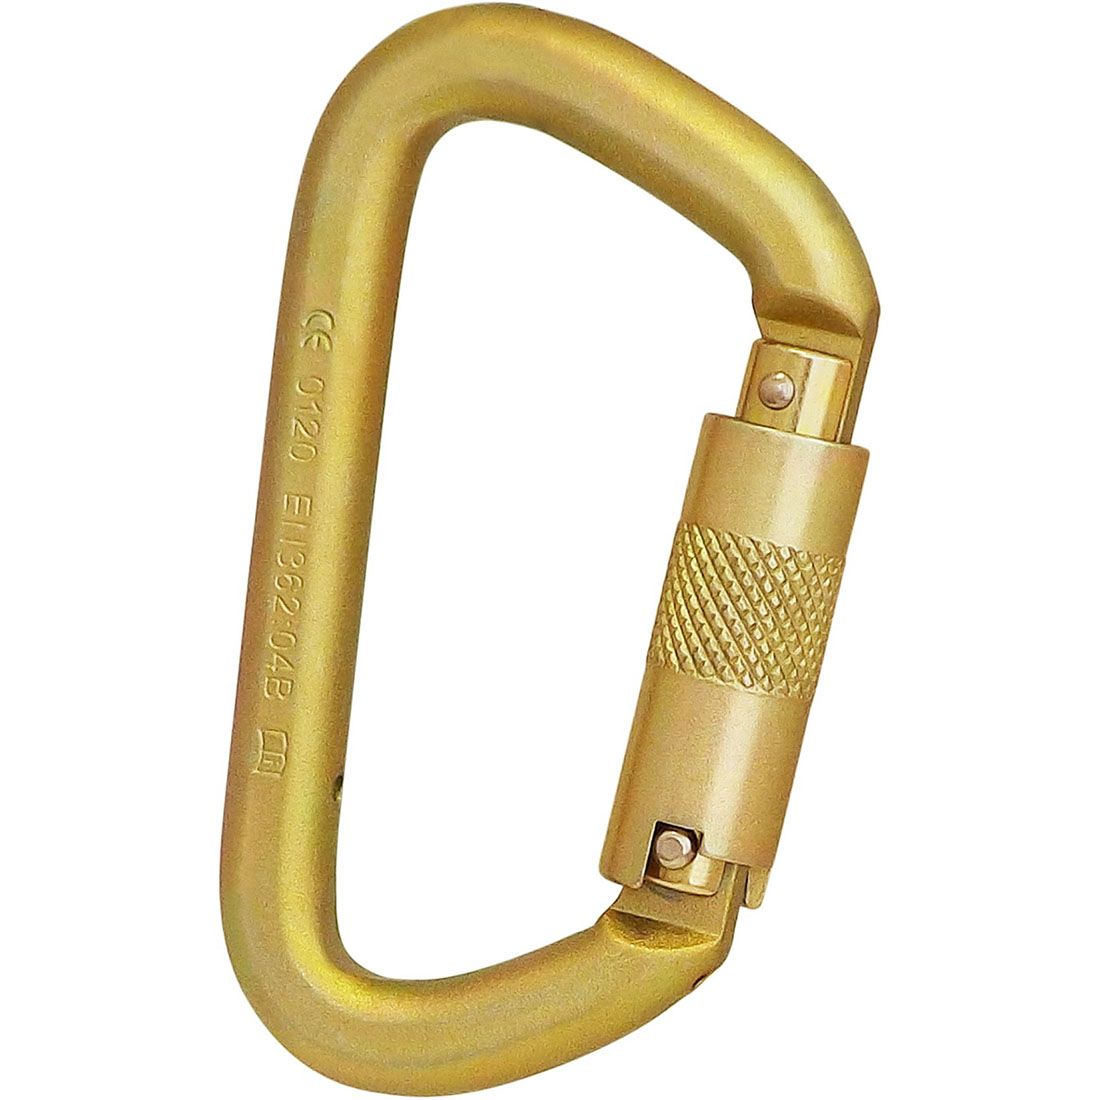 ISC Offset D Steel Carabiner - 3-Stage Locking - Gold